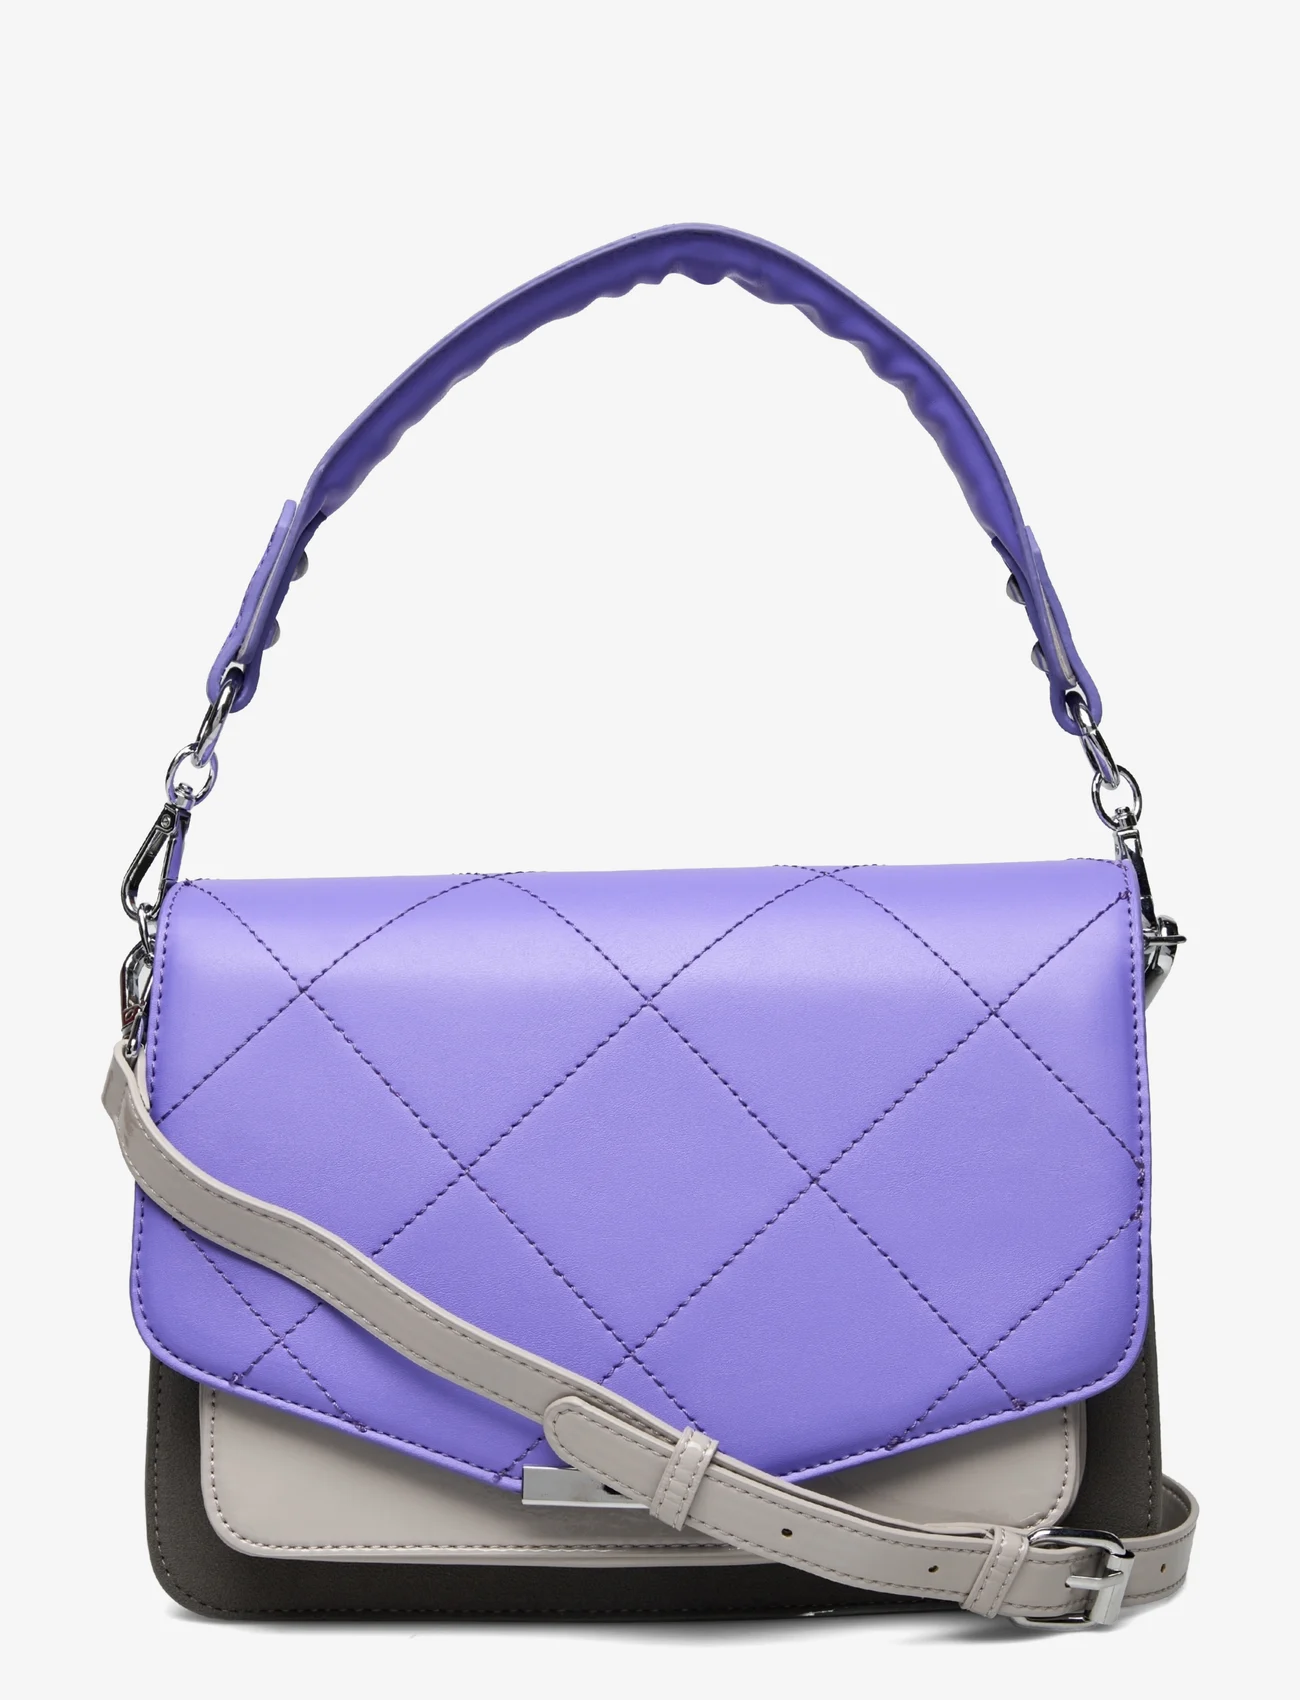 Noella - Blanca Multi Compartment Bag - festtøj til outletpriser - bright purple/grey lak/grey - 0